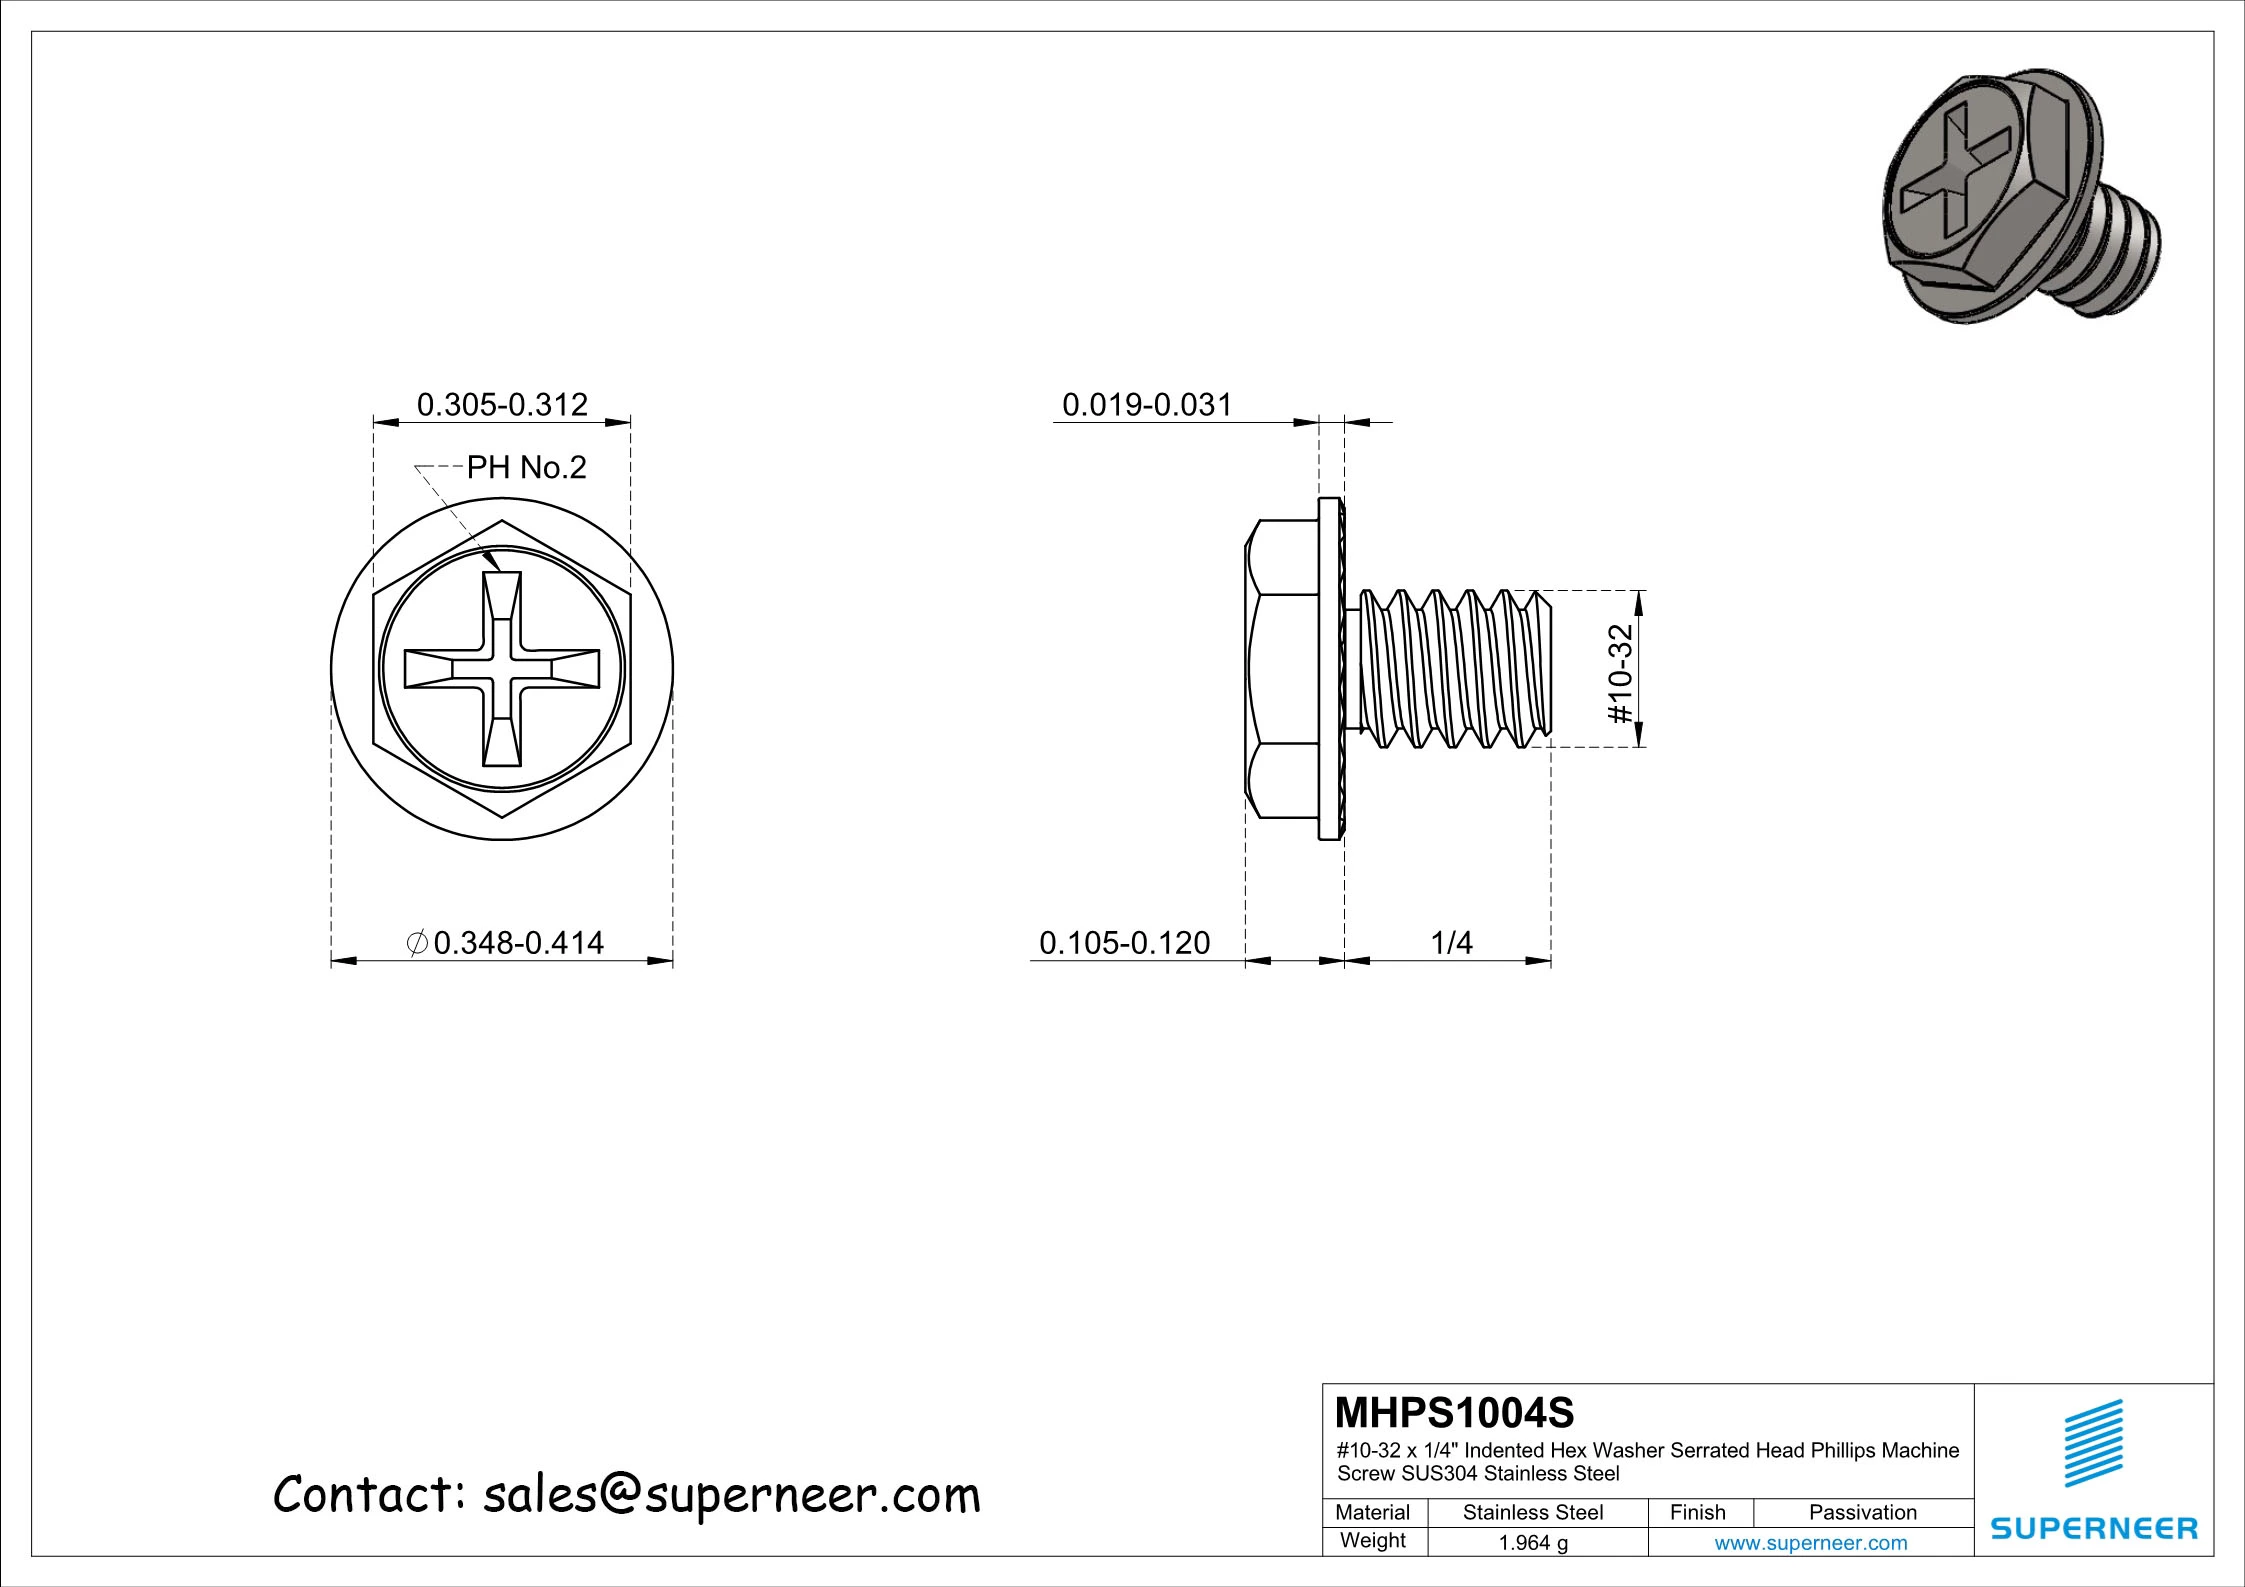 10-32 x 1/4" Indented Hex Washer Serrated Head Phillips Machine Screw SUS304 Stainless Steel Inox